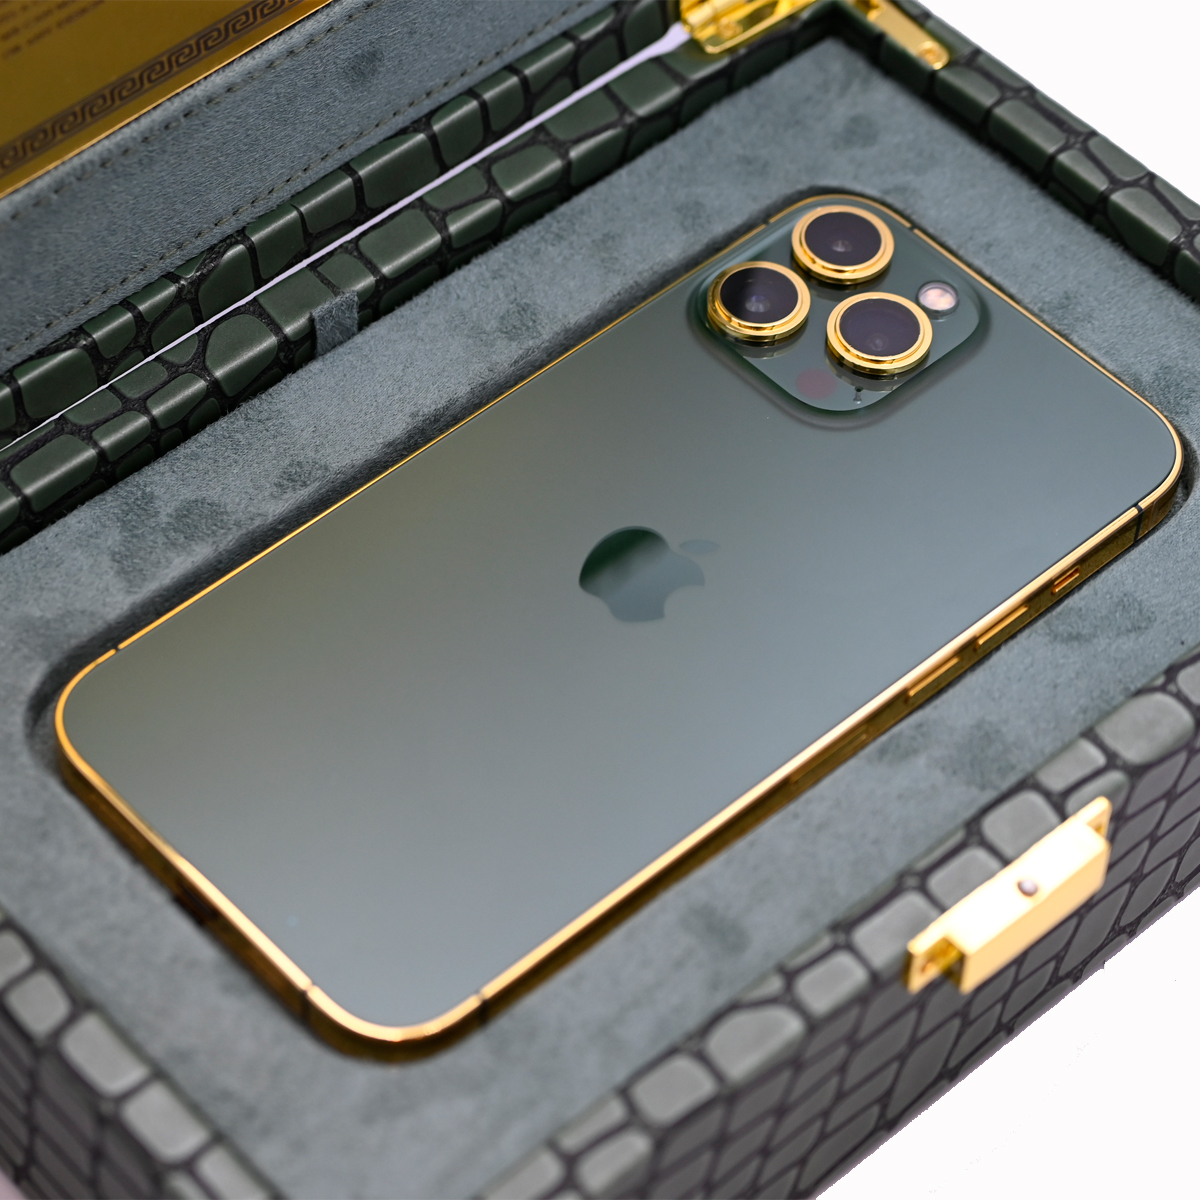 Caviar Luxury Customized 24k Gold Frame iPhone 13 Pro Max - Midnight Green 256GB